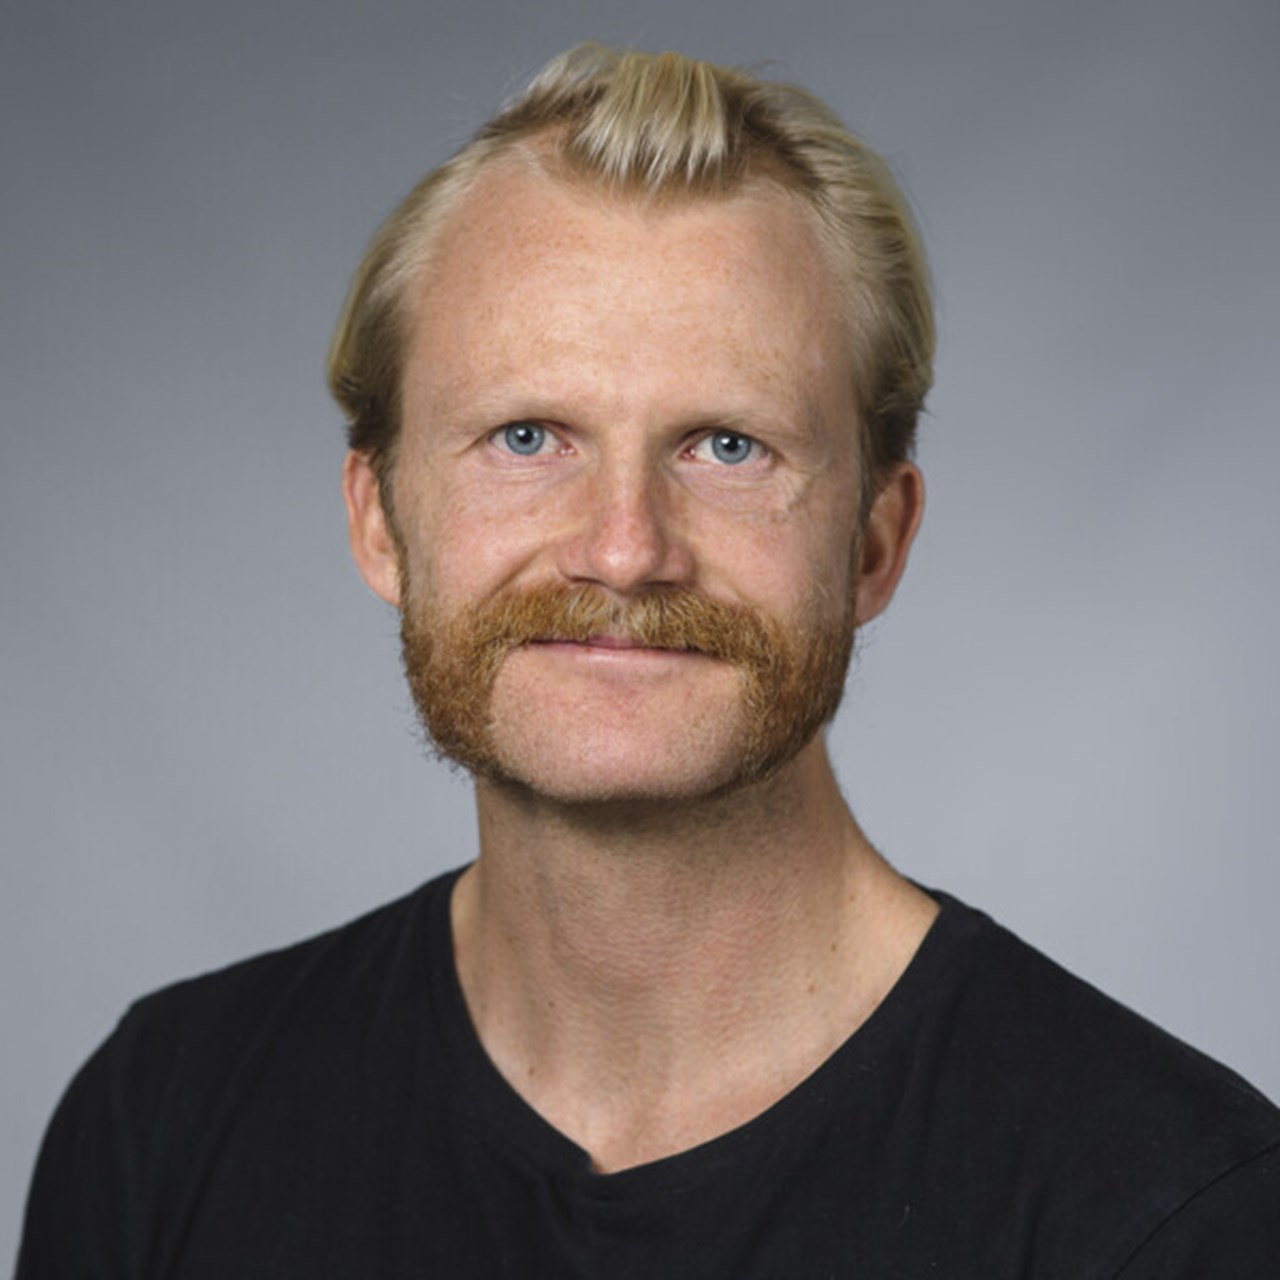 Björn Högberg, Associate Professor at the Department of Social Work, Umeå University.